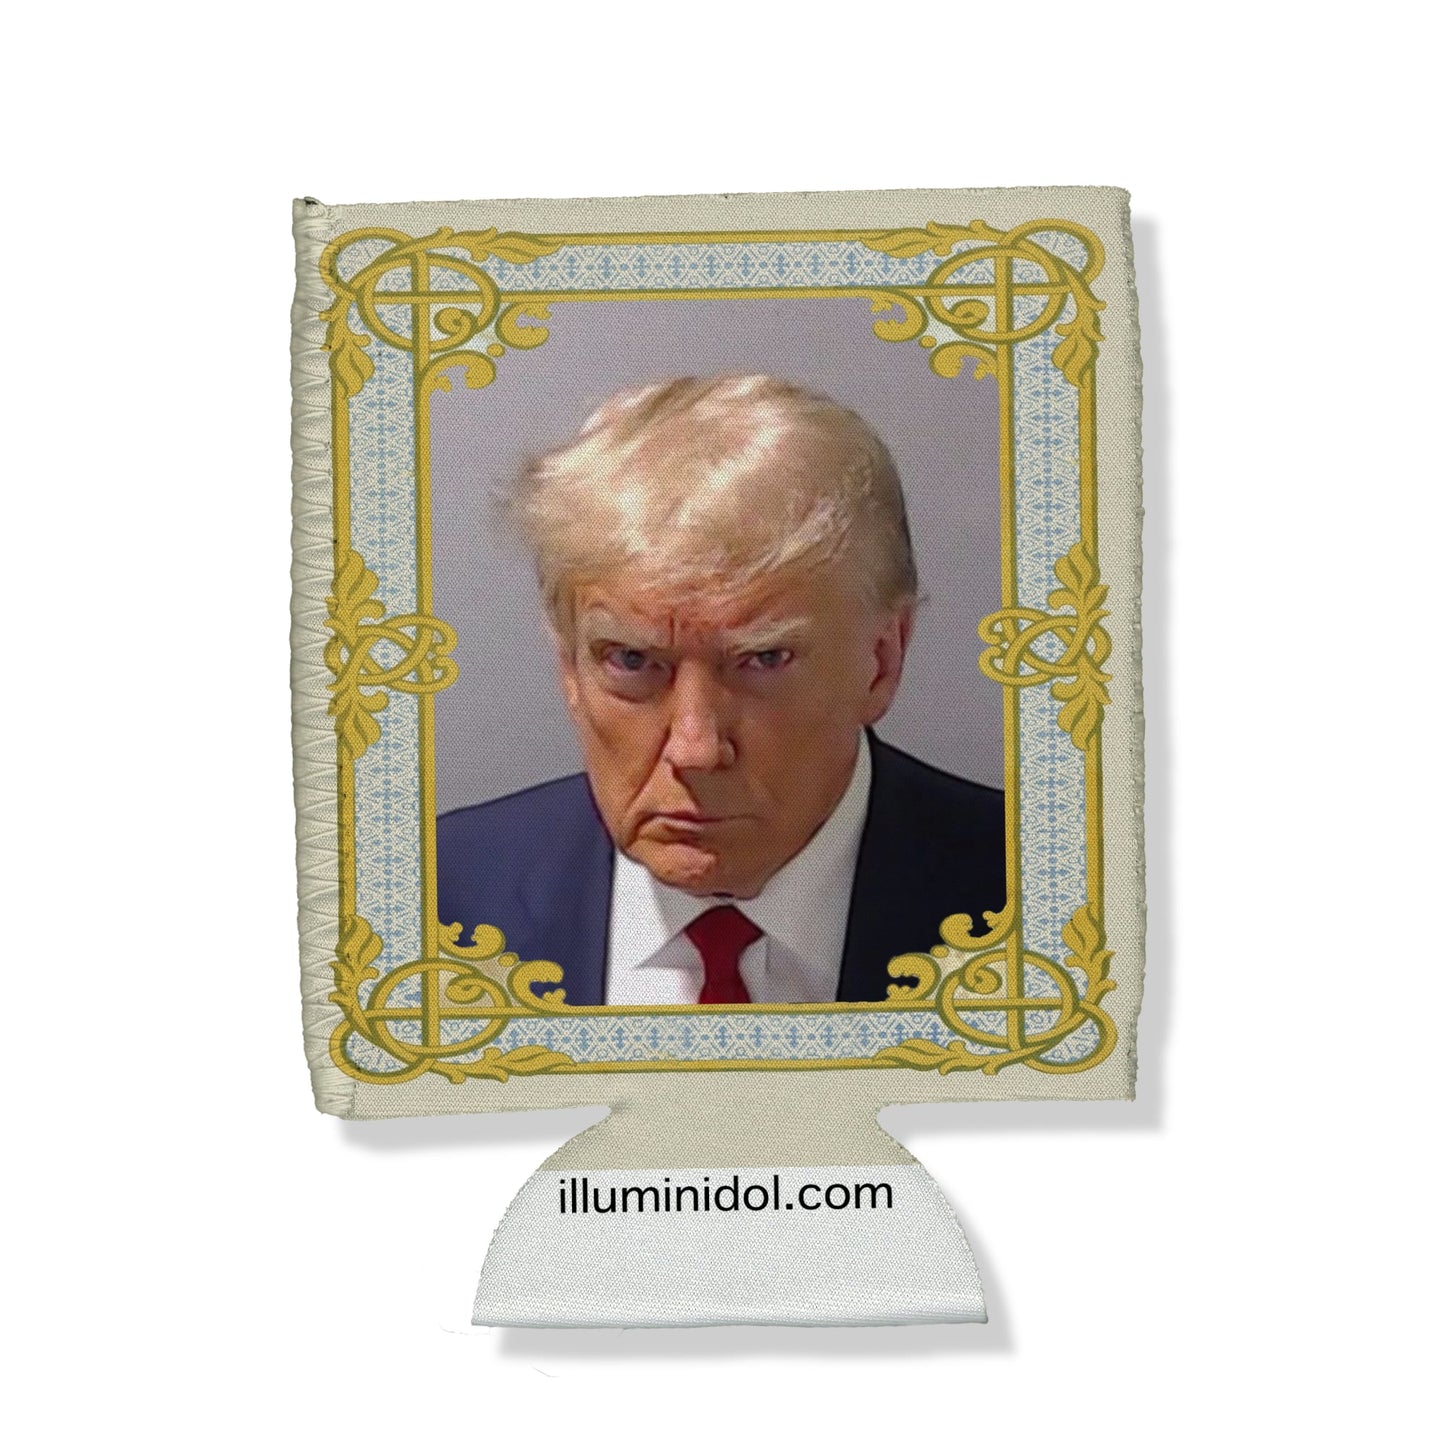 OEH Koozie - Donald Trump Mug Shot